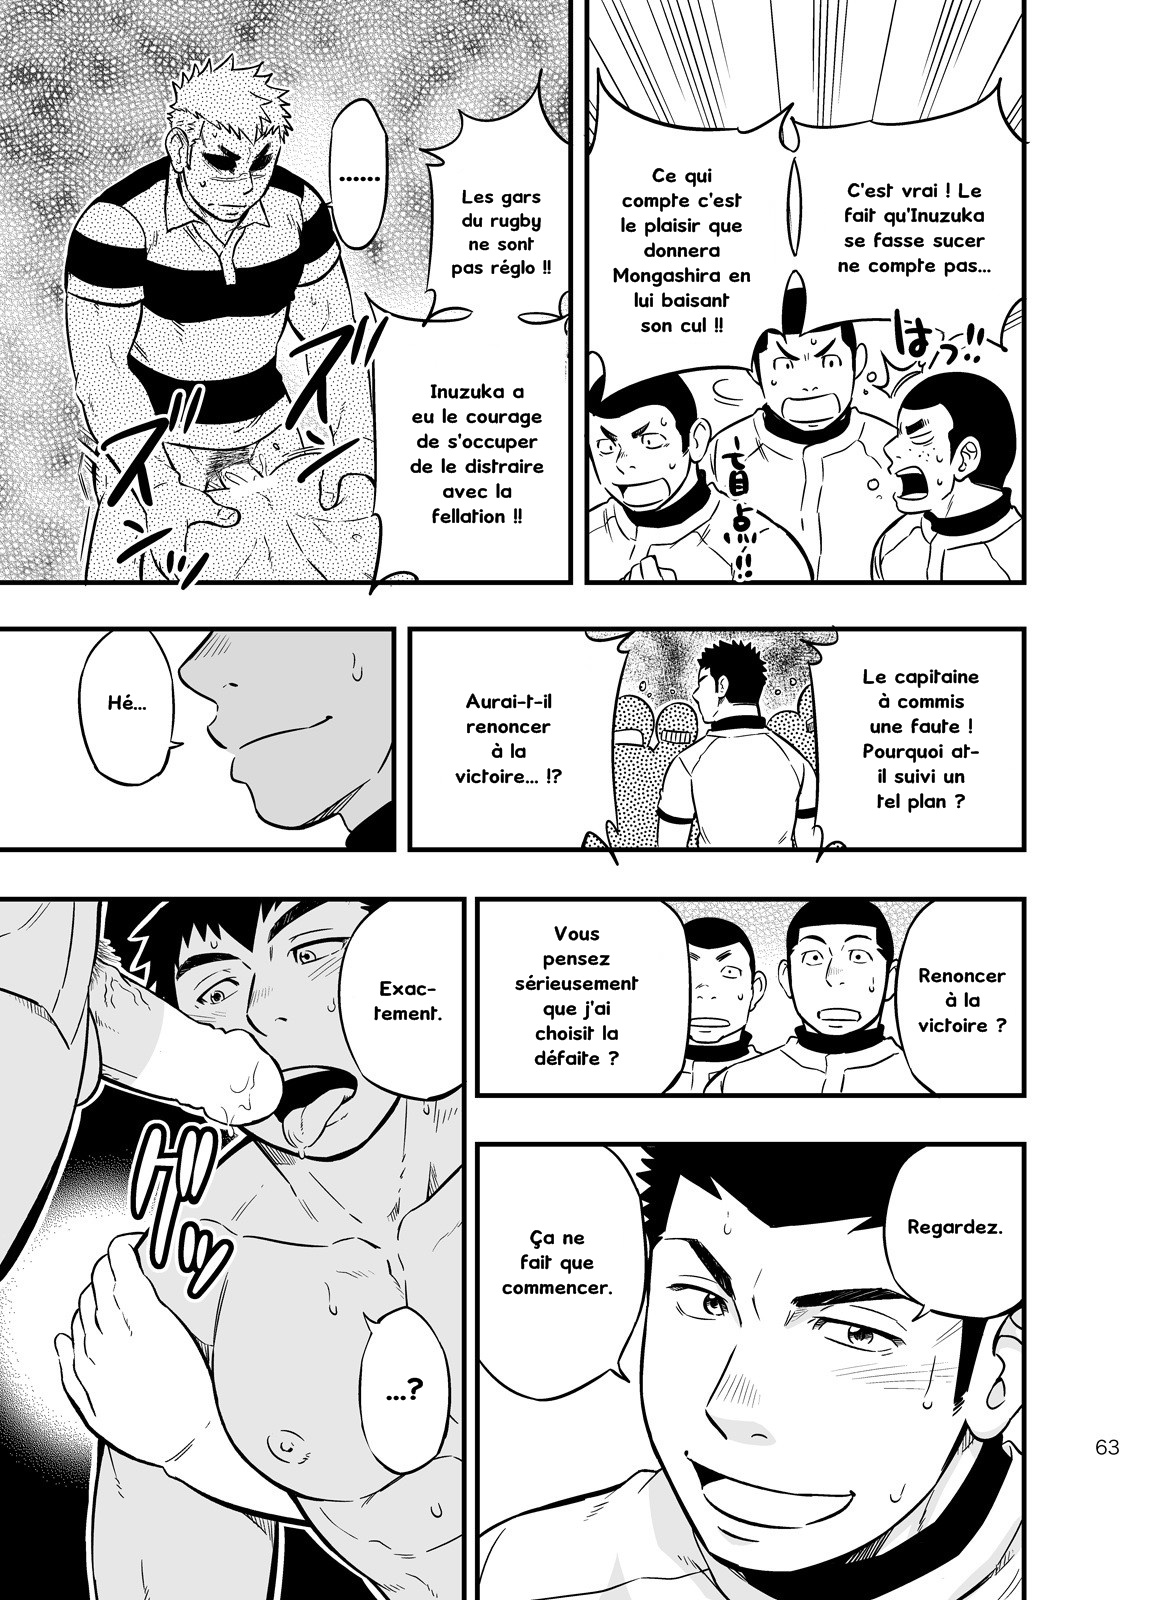 Moshimo Danshikou no Hoken Taiiku ga Jitsugi Ari Dattara 2  If Boys Health and PhysEd Taught Practical Skills 2 numero d'image 61